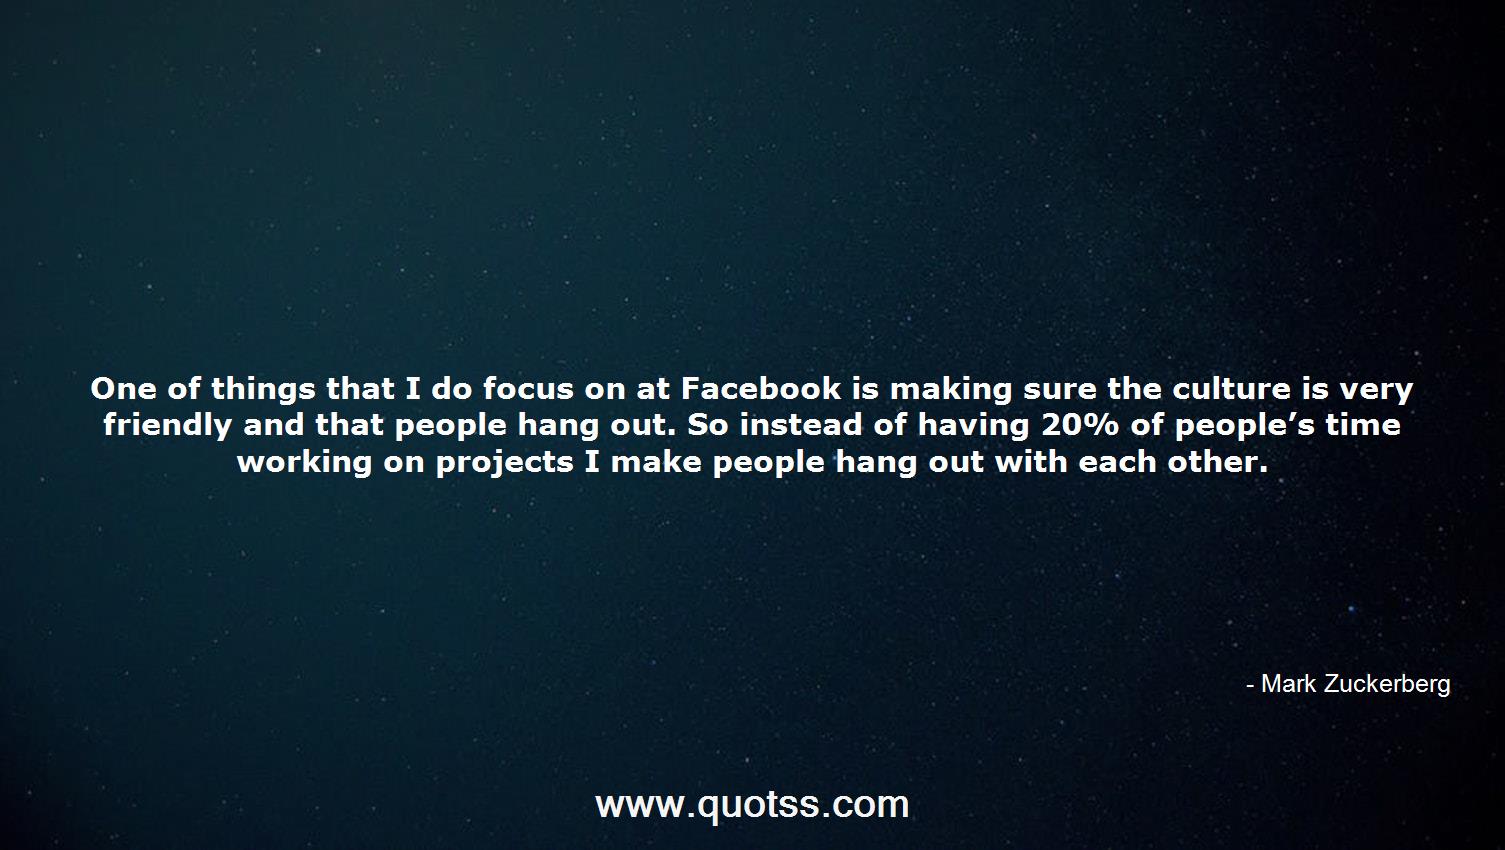 Mark Zuckerberg Quote on Quotss